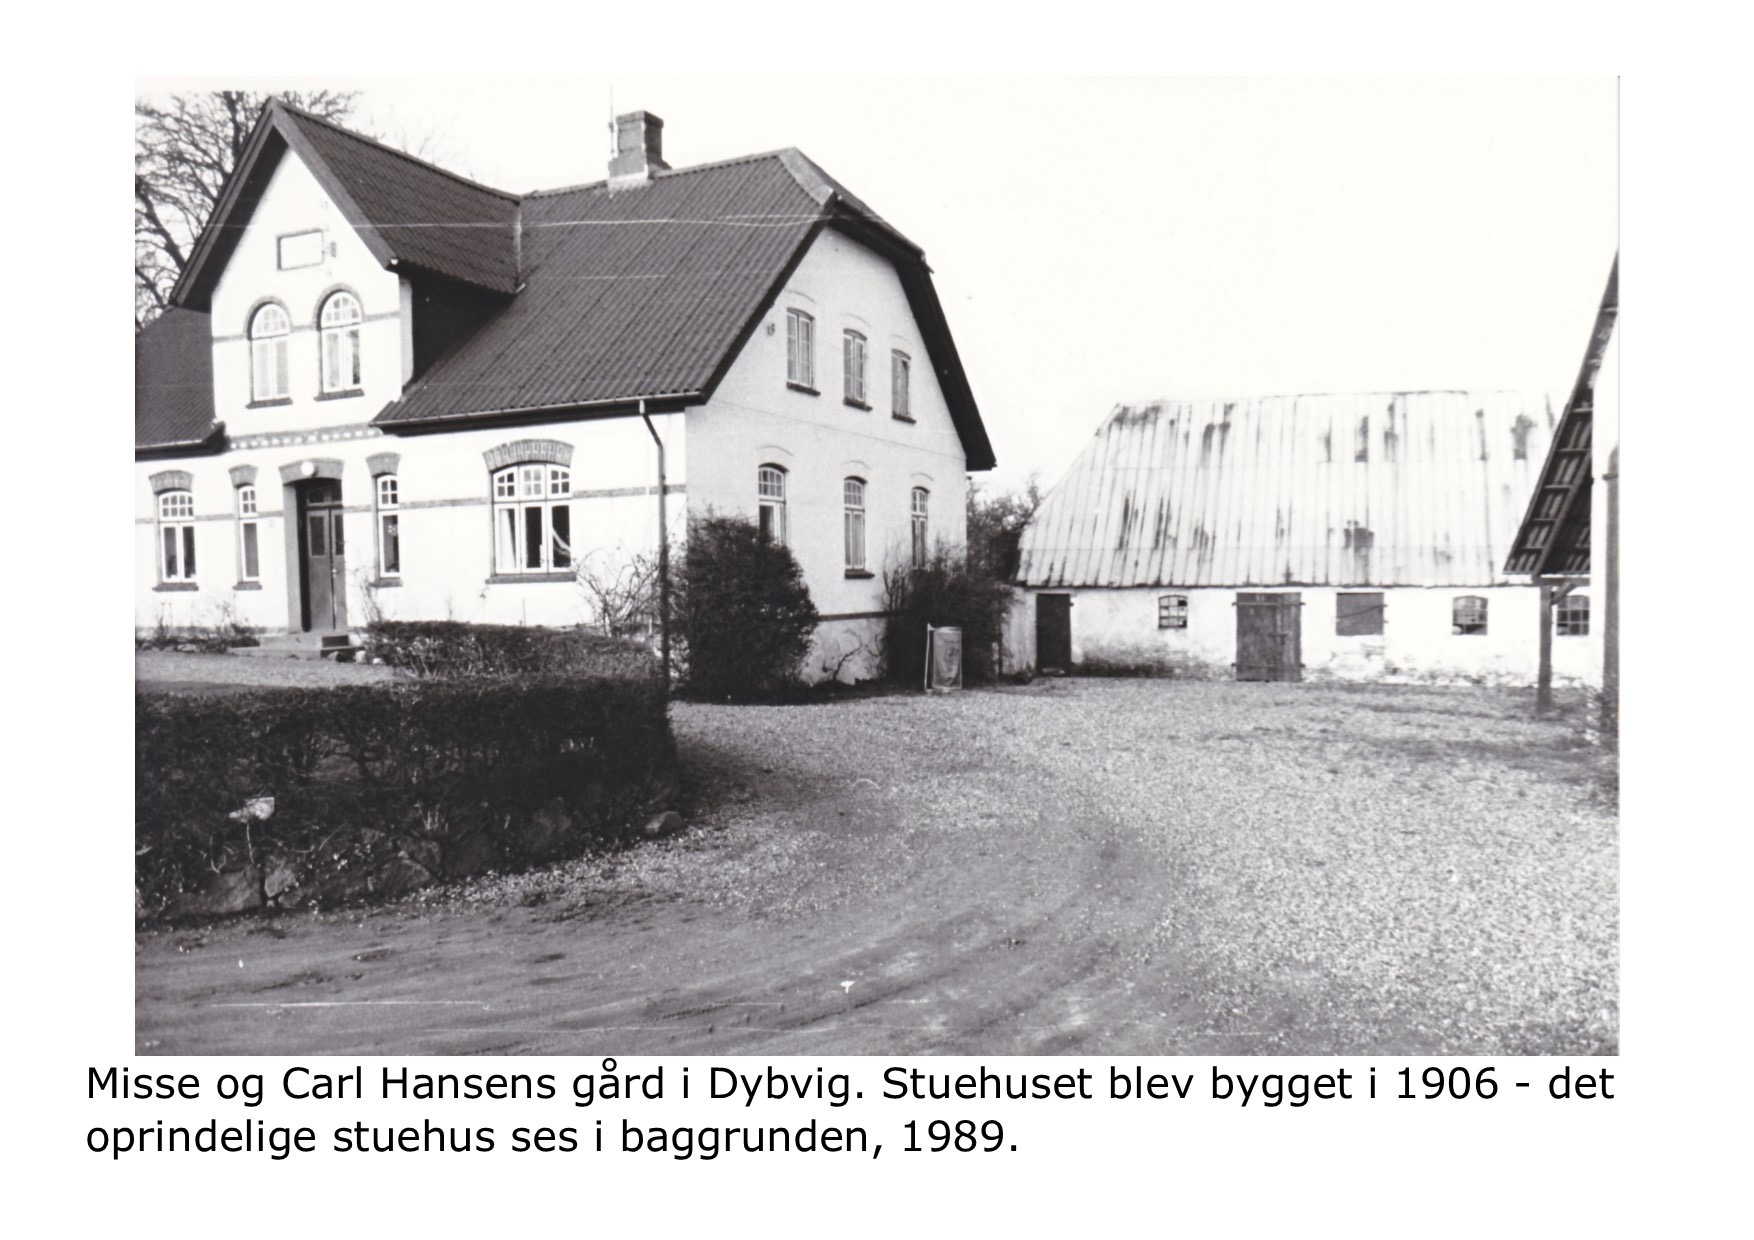 Dybvig Stuehus bygget 1905   - 1989 